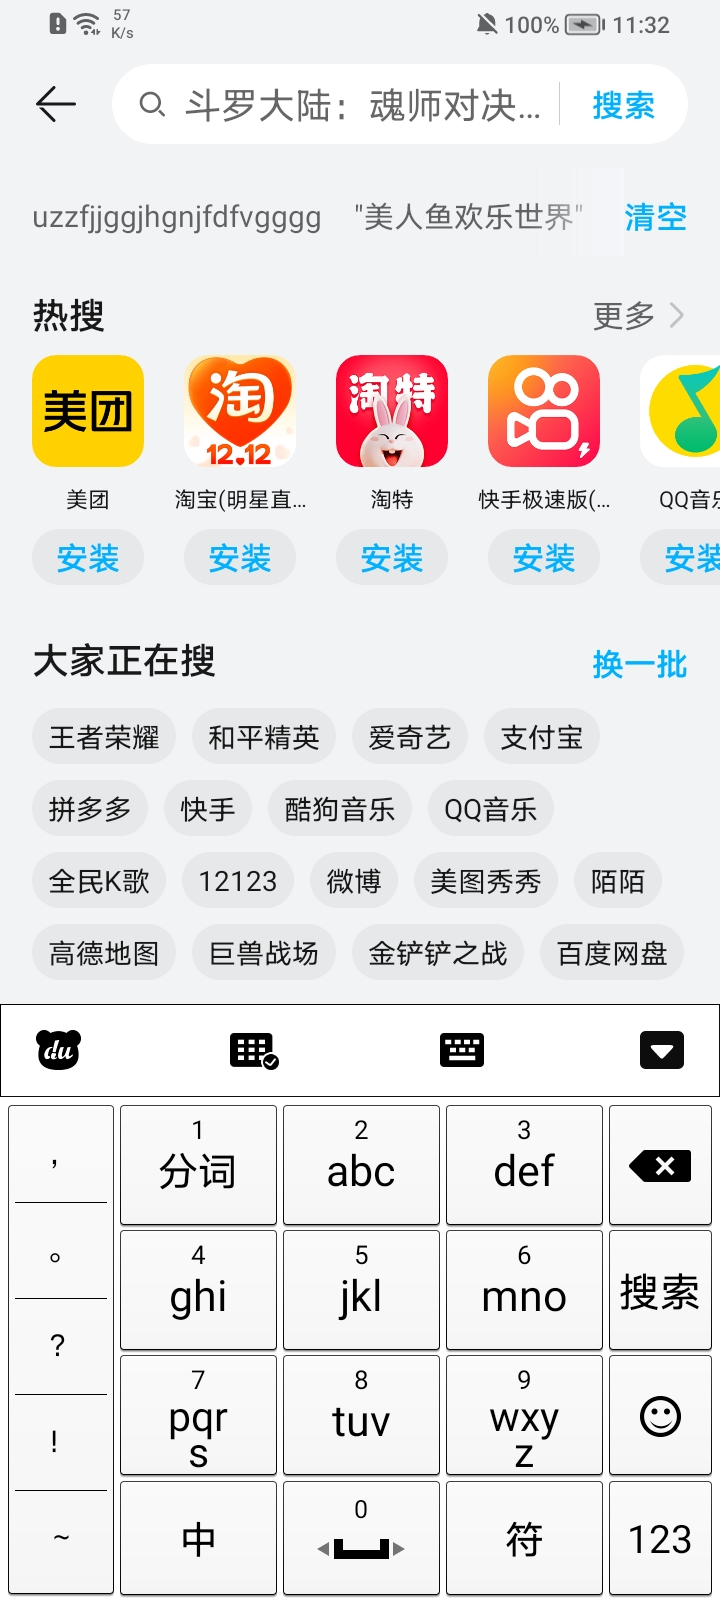 Baidu IME for 2nd Screenٶ뷨epdappͼ